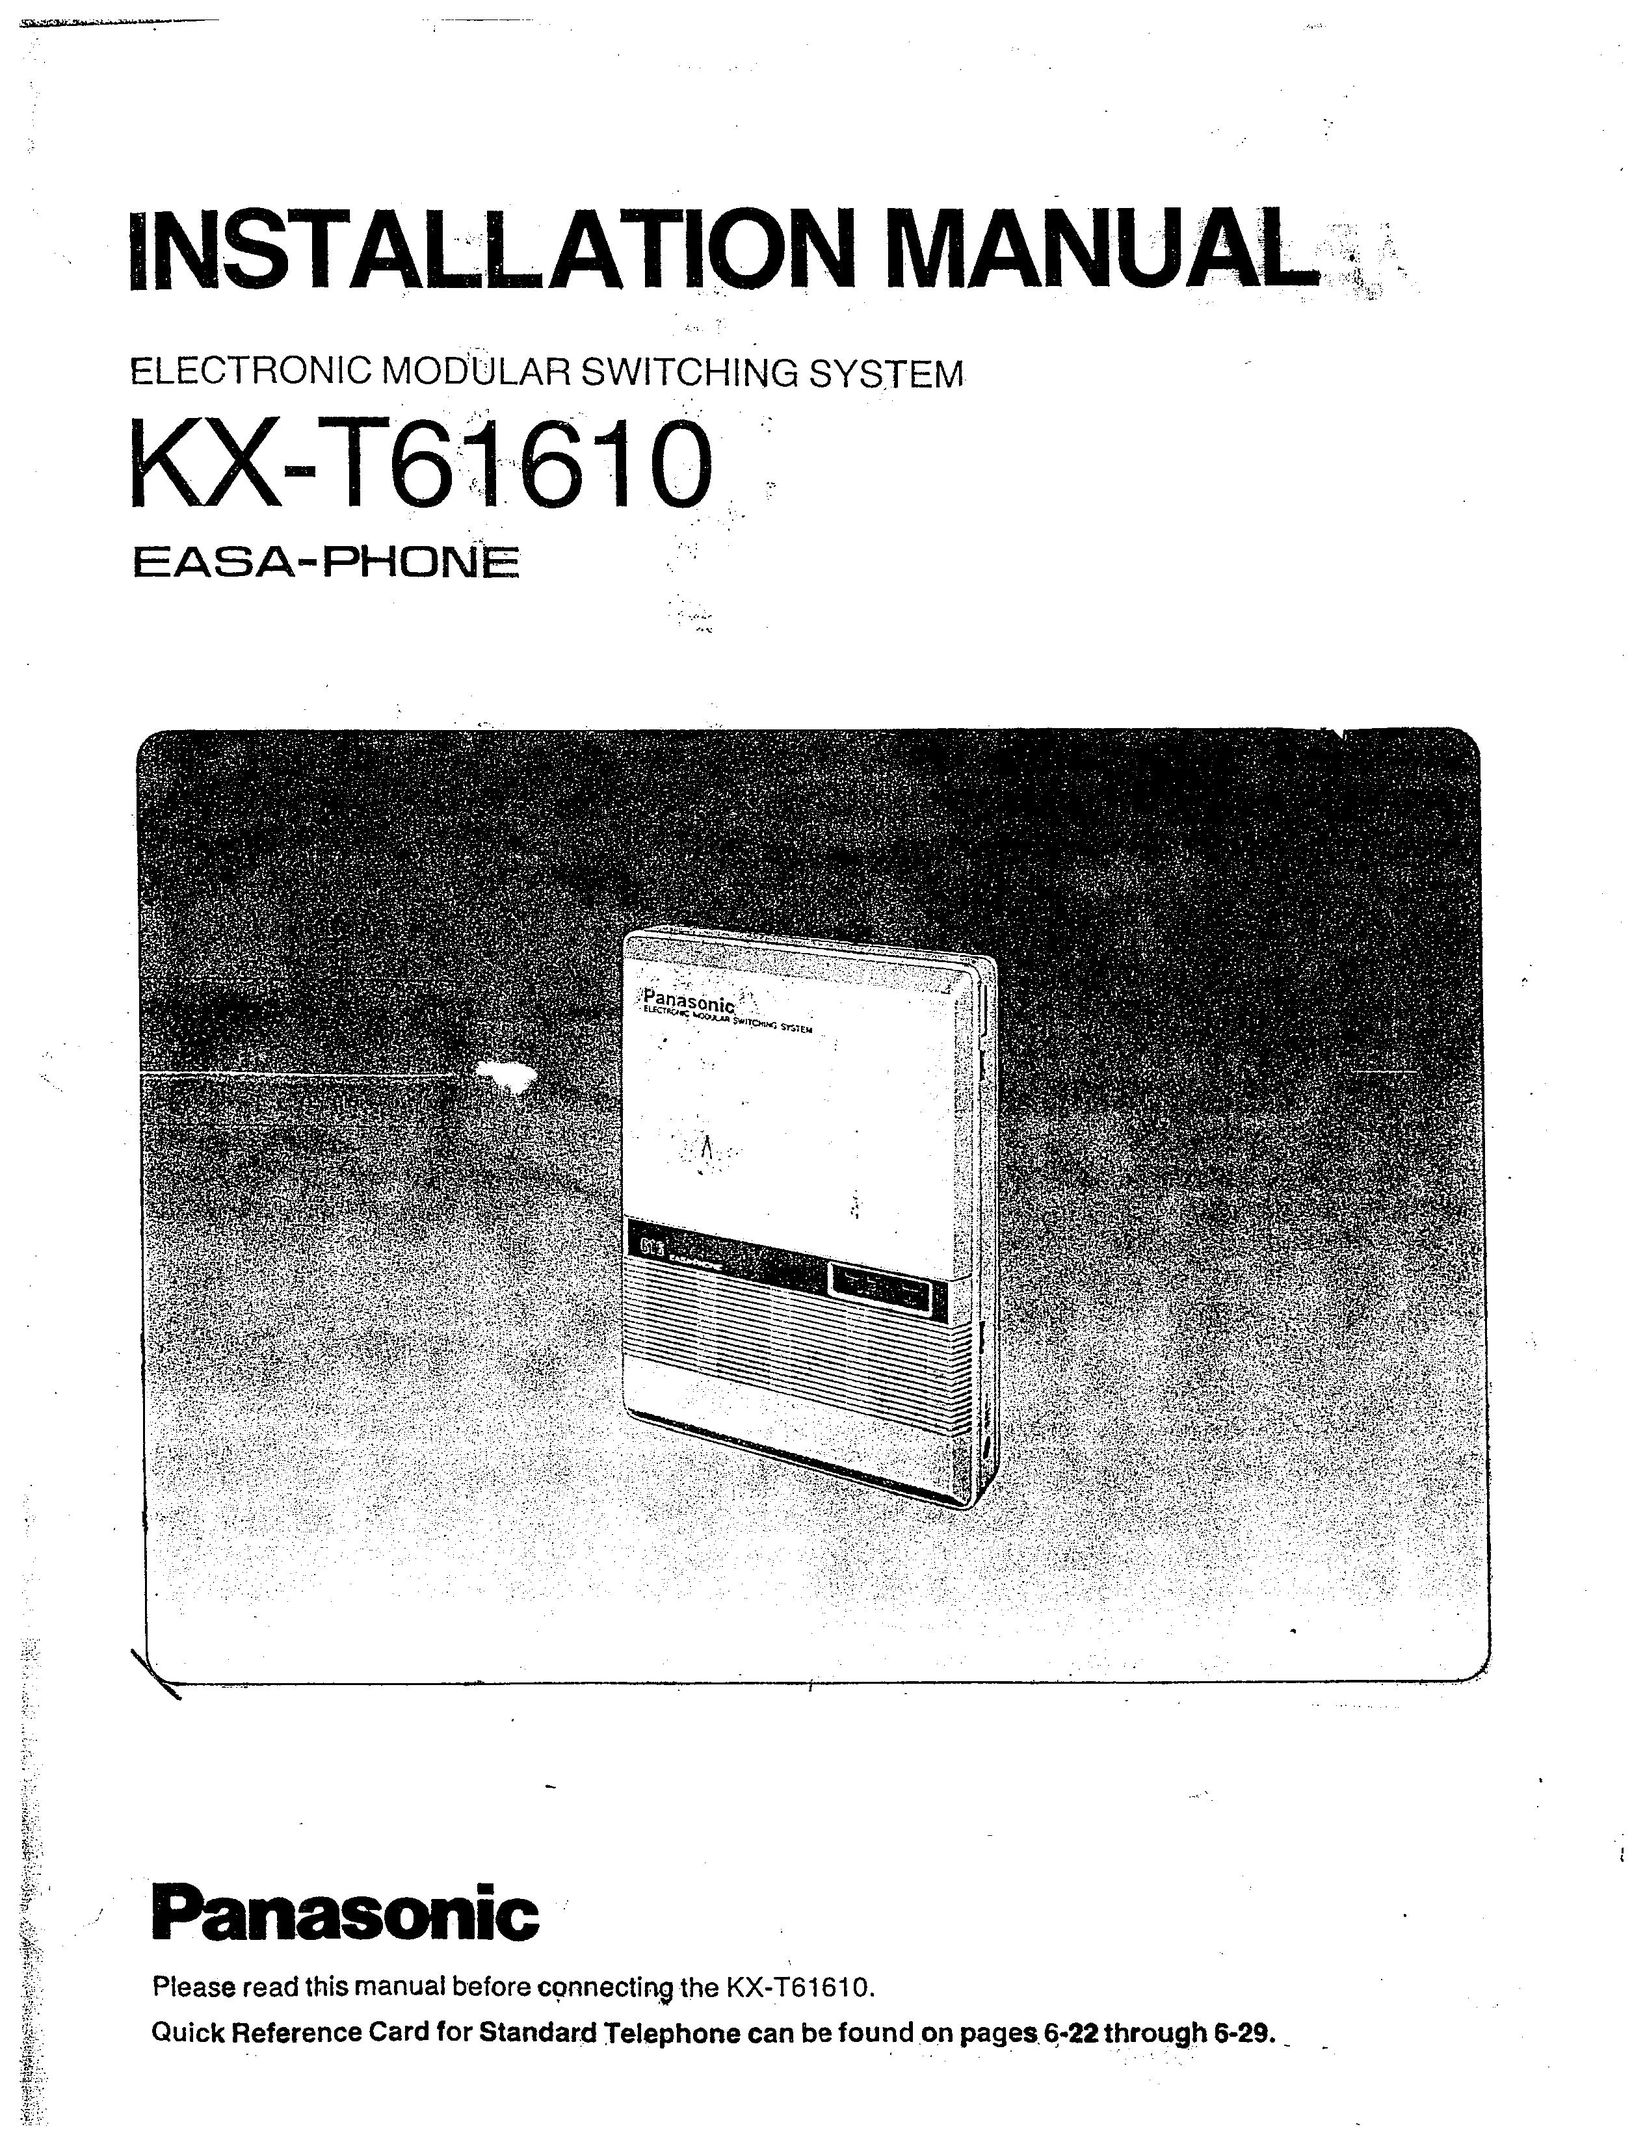 Panasonic KX-T61610 Switch User Manual